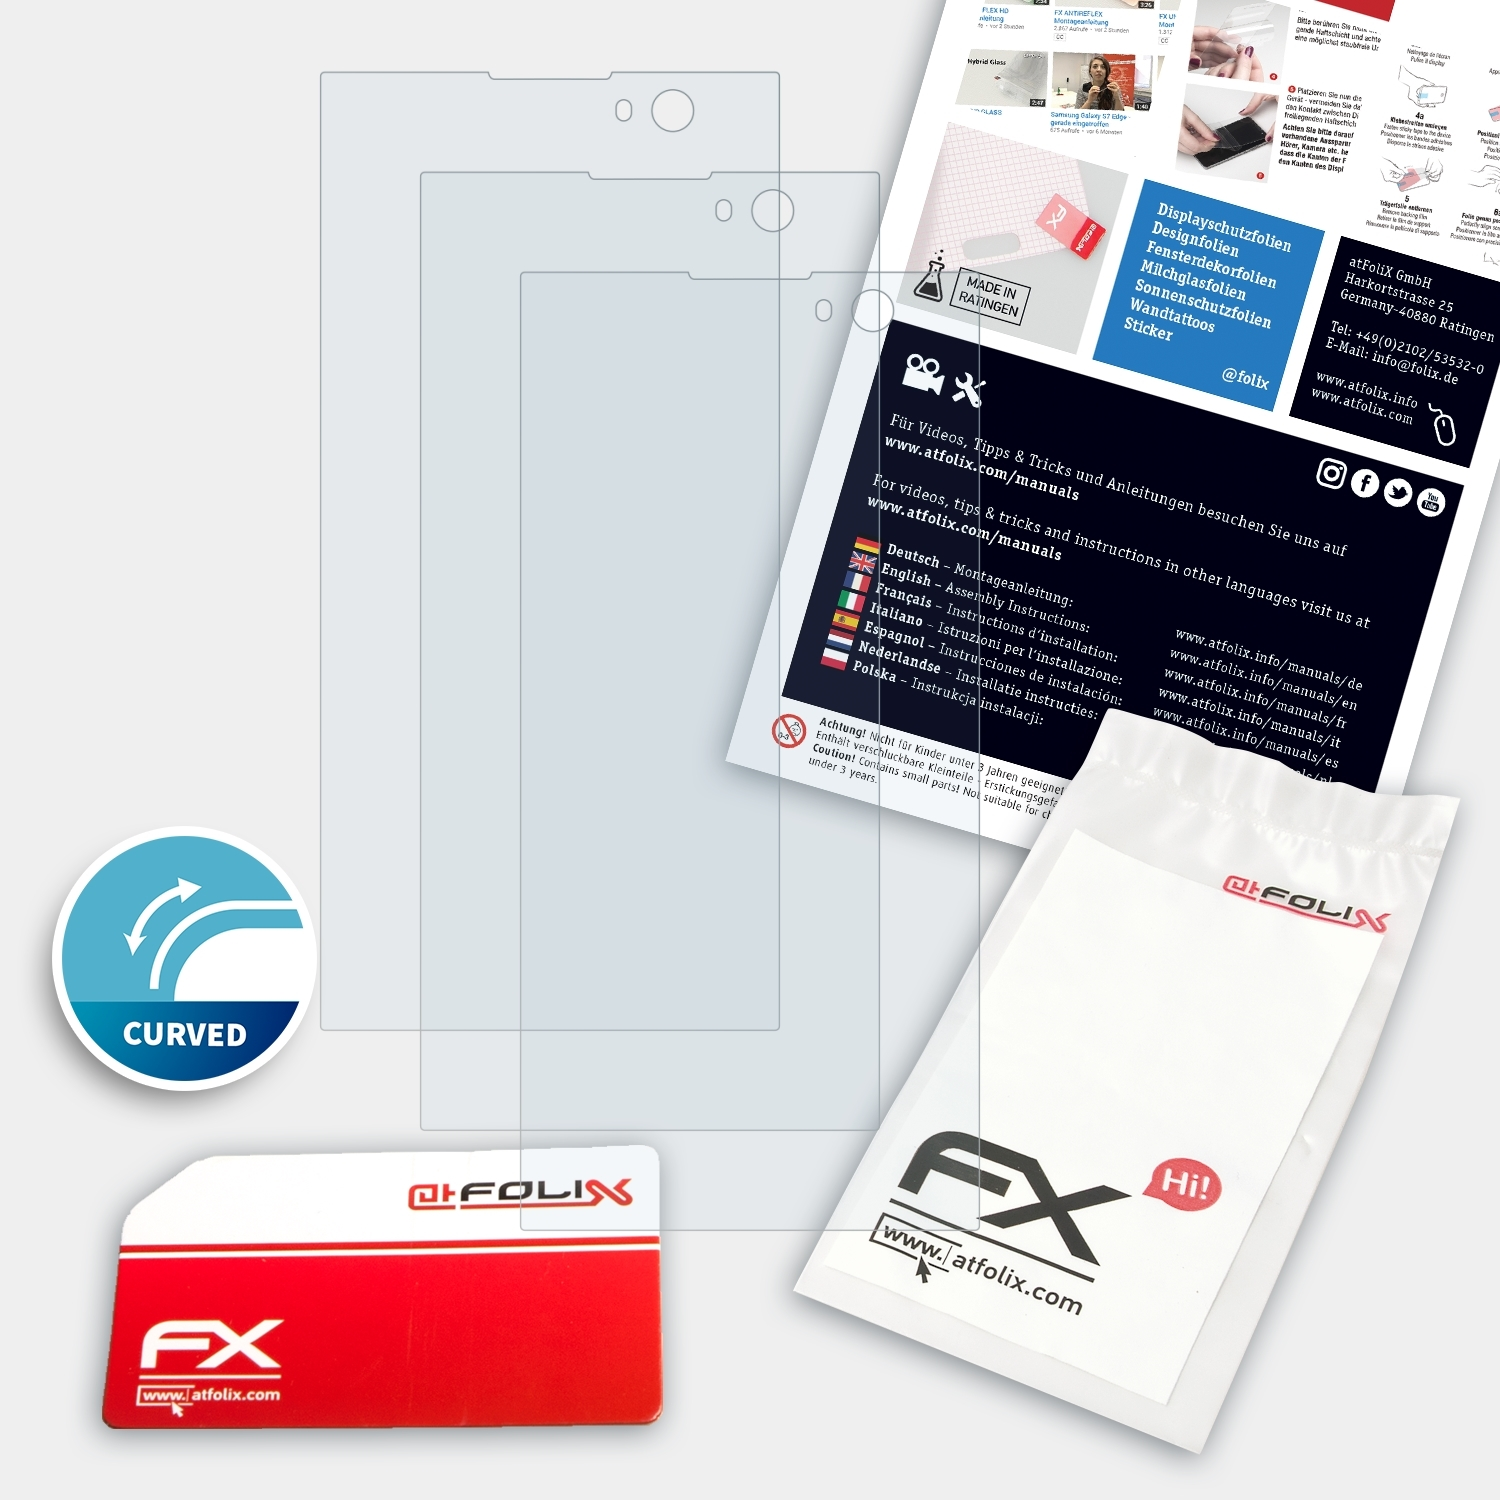 Sony 3x FX-ActiFleX Displayschutz(für ATFOLIX Xperia XA2)